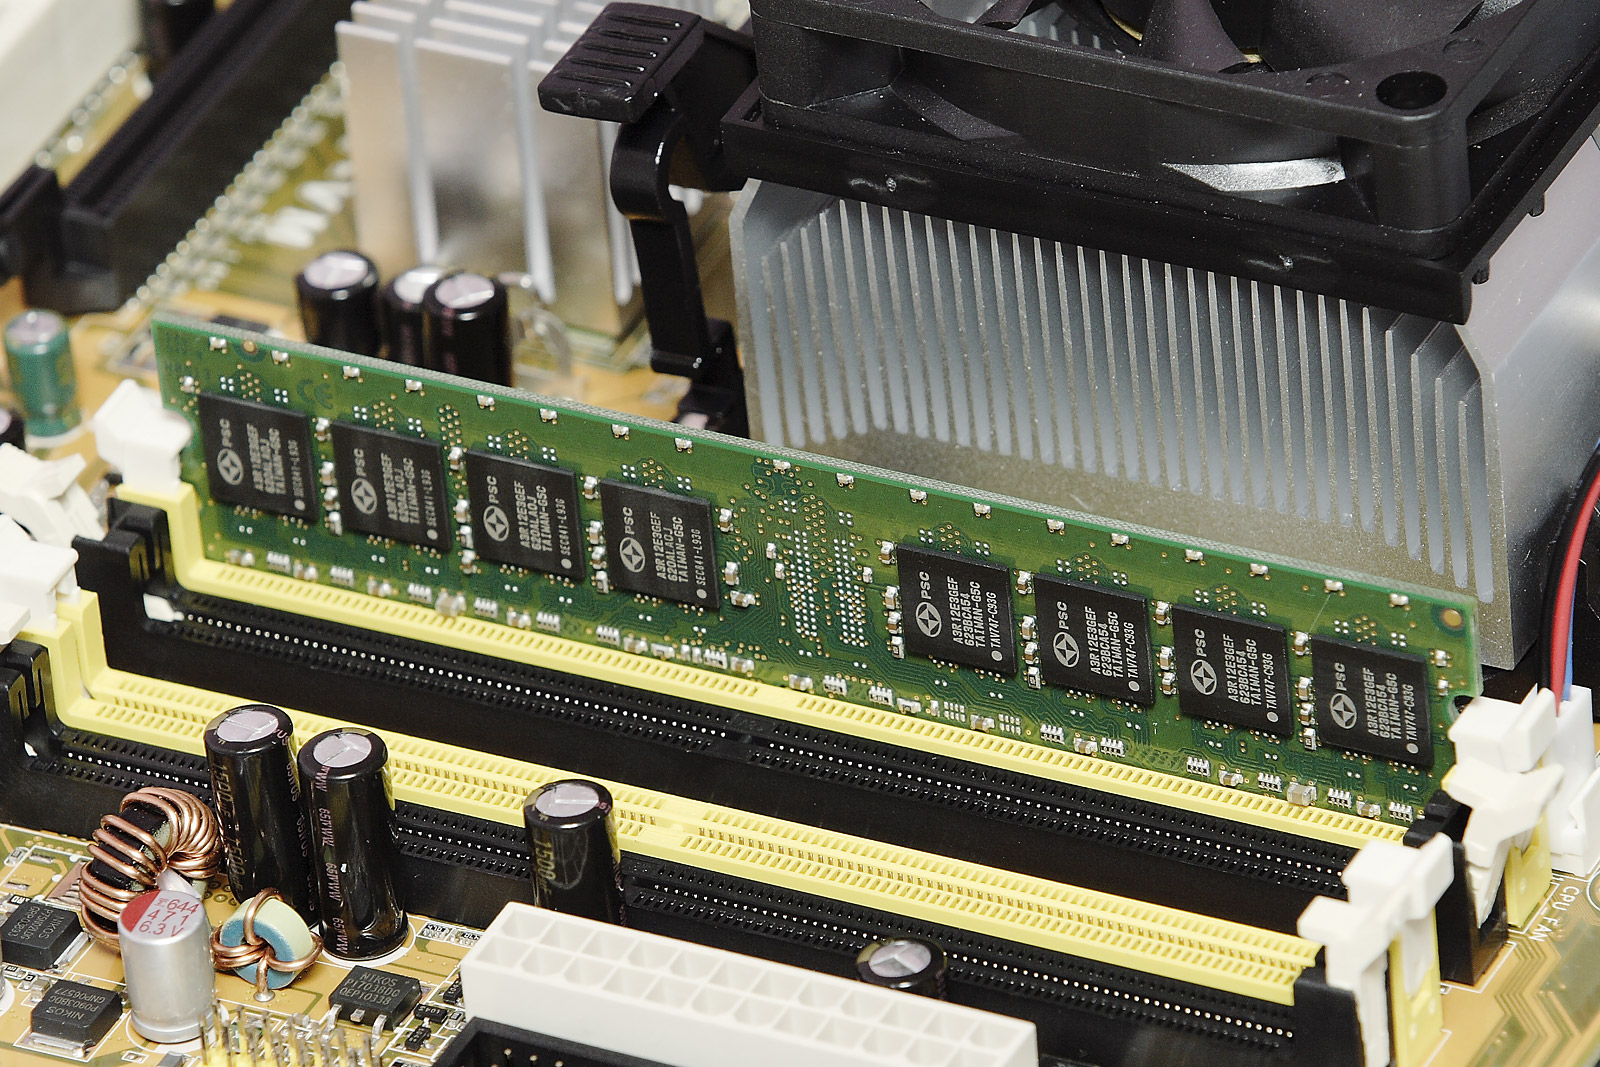 File:DDR2 ram mounted.jpg - Wikimedia Commons